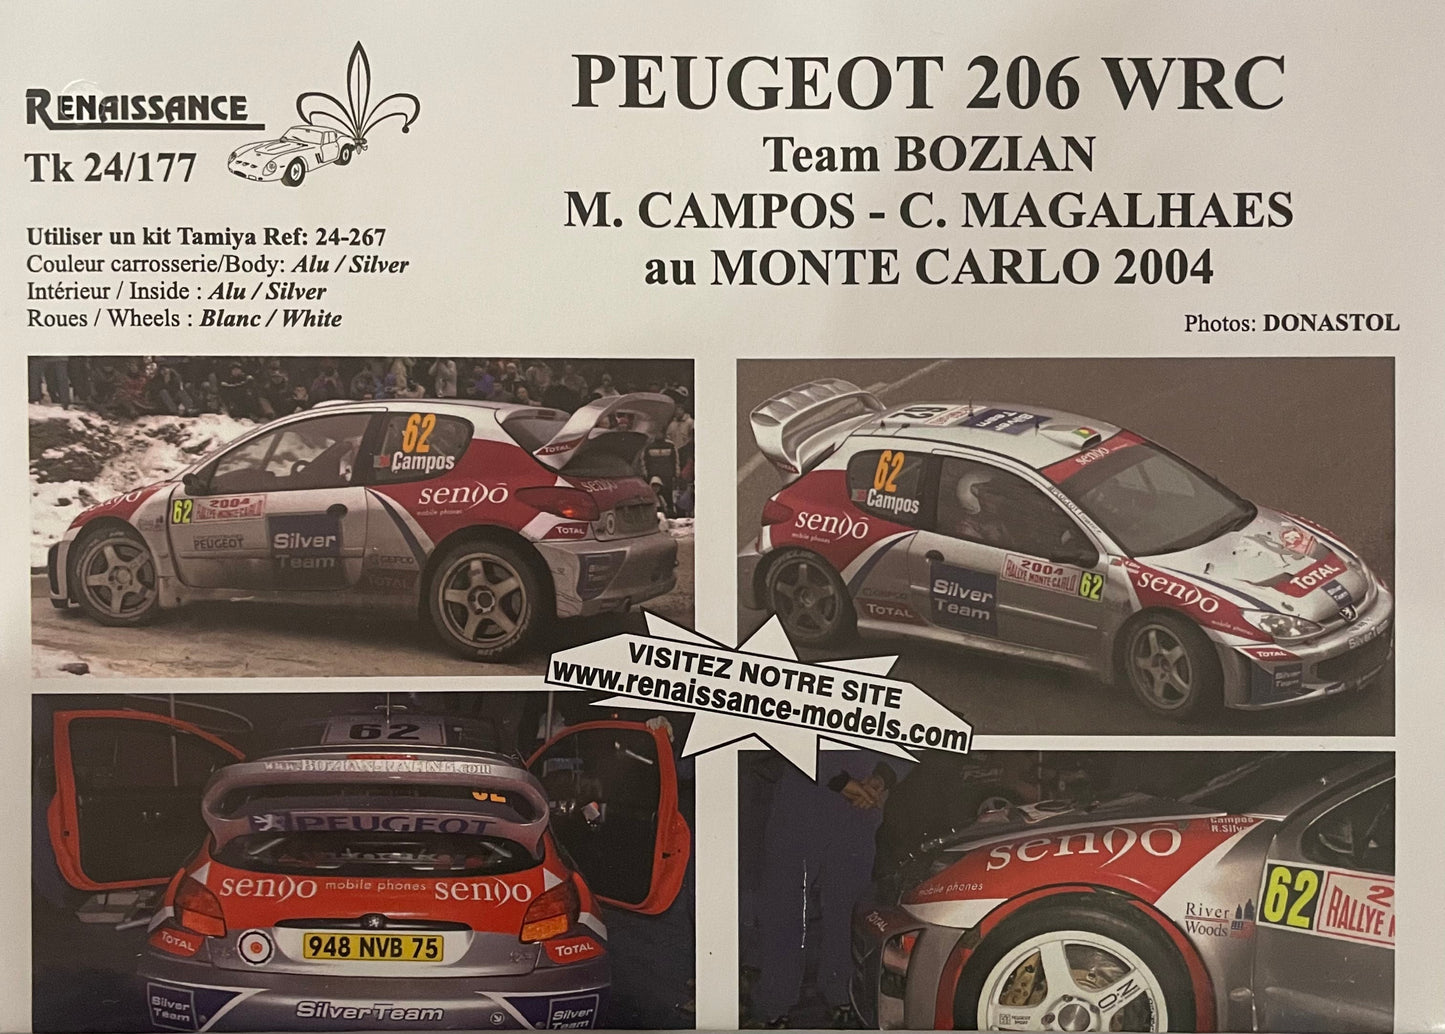 DECALS PEUGEOT 206 WRC TEAM BOZIAN - MIGUEL CAMPOS - RALLY MONTE CARLO 2004